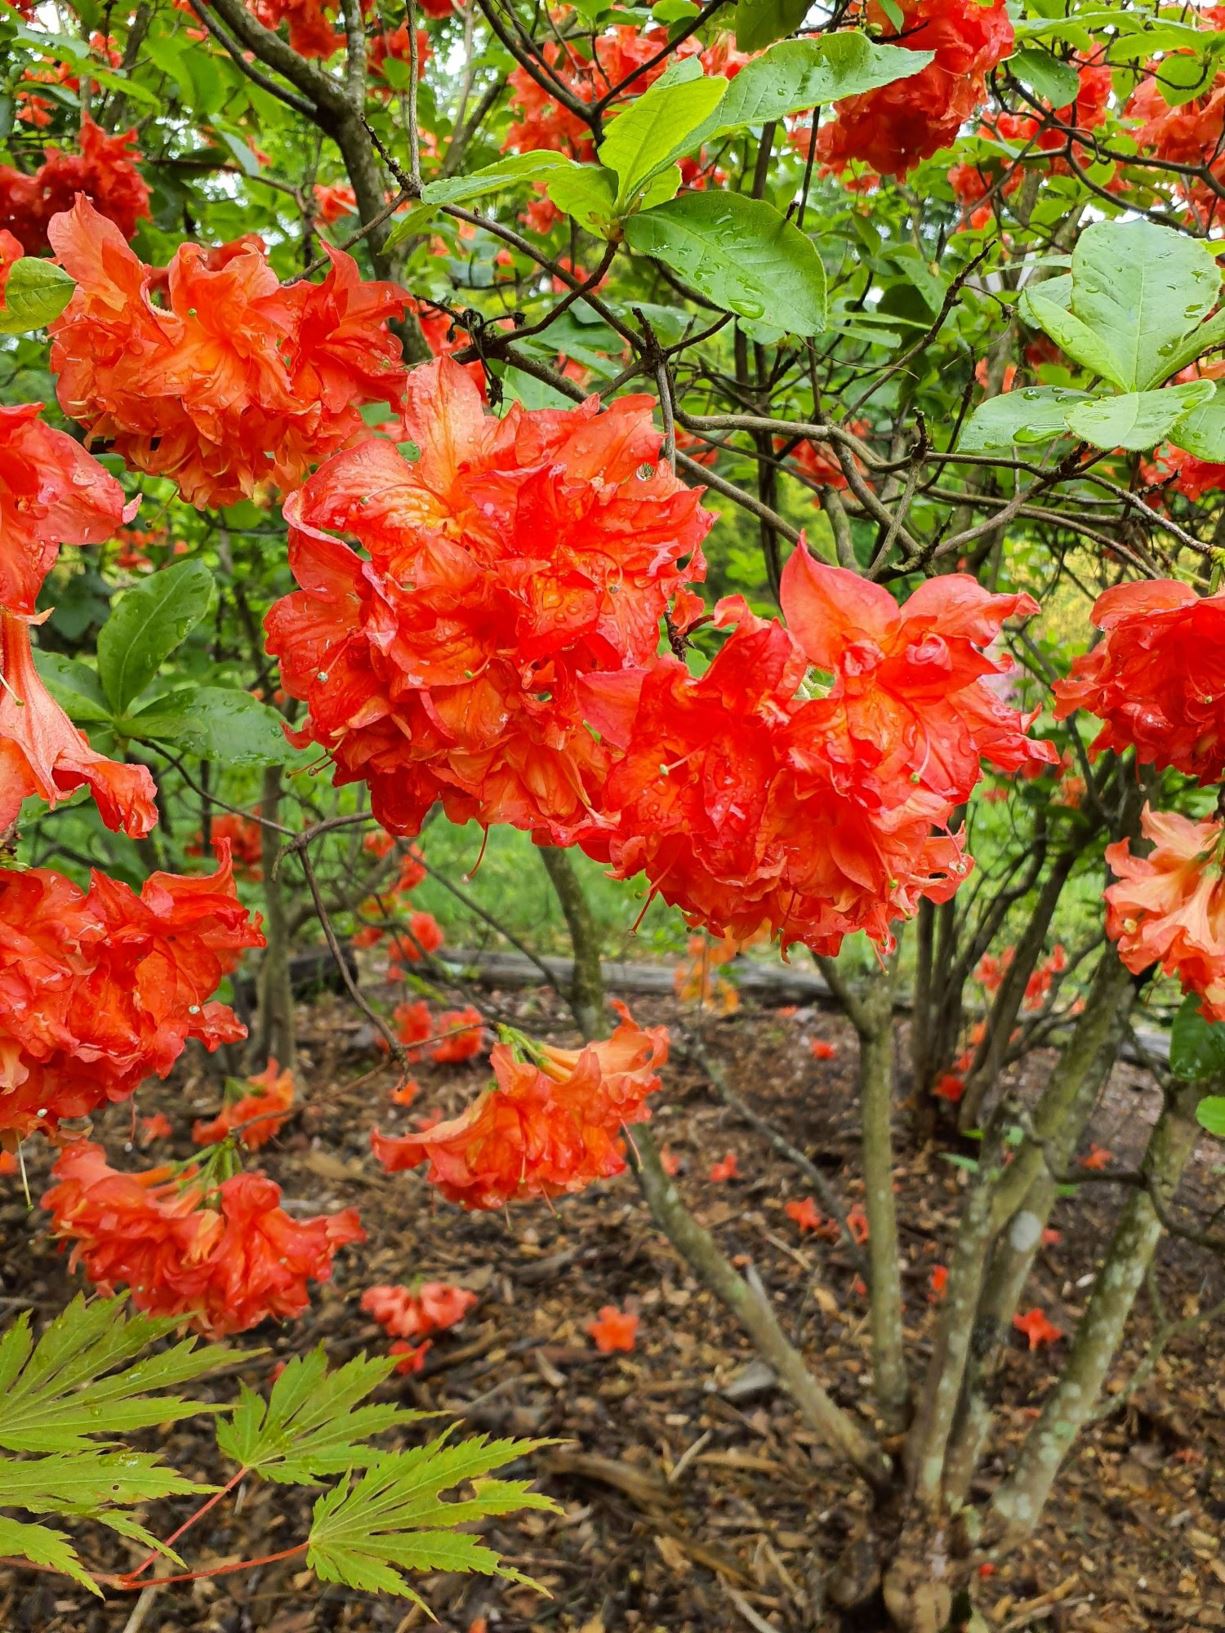 Rhododendron 'Salmon Joy' - Salmon Joy azalea